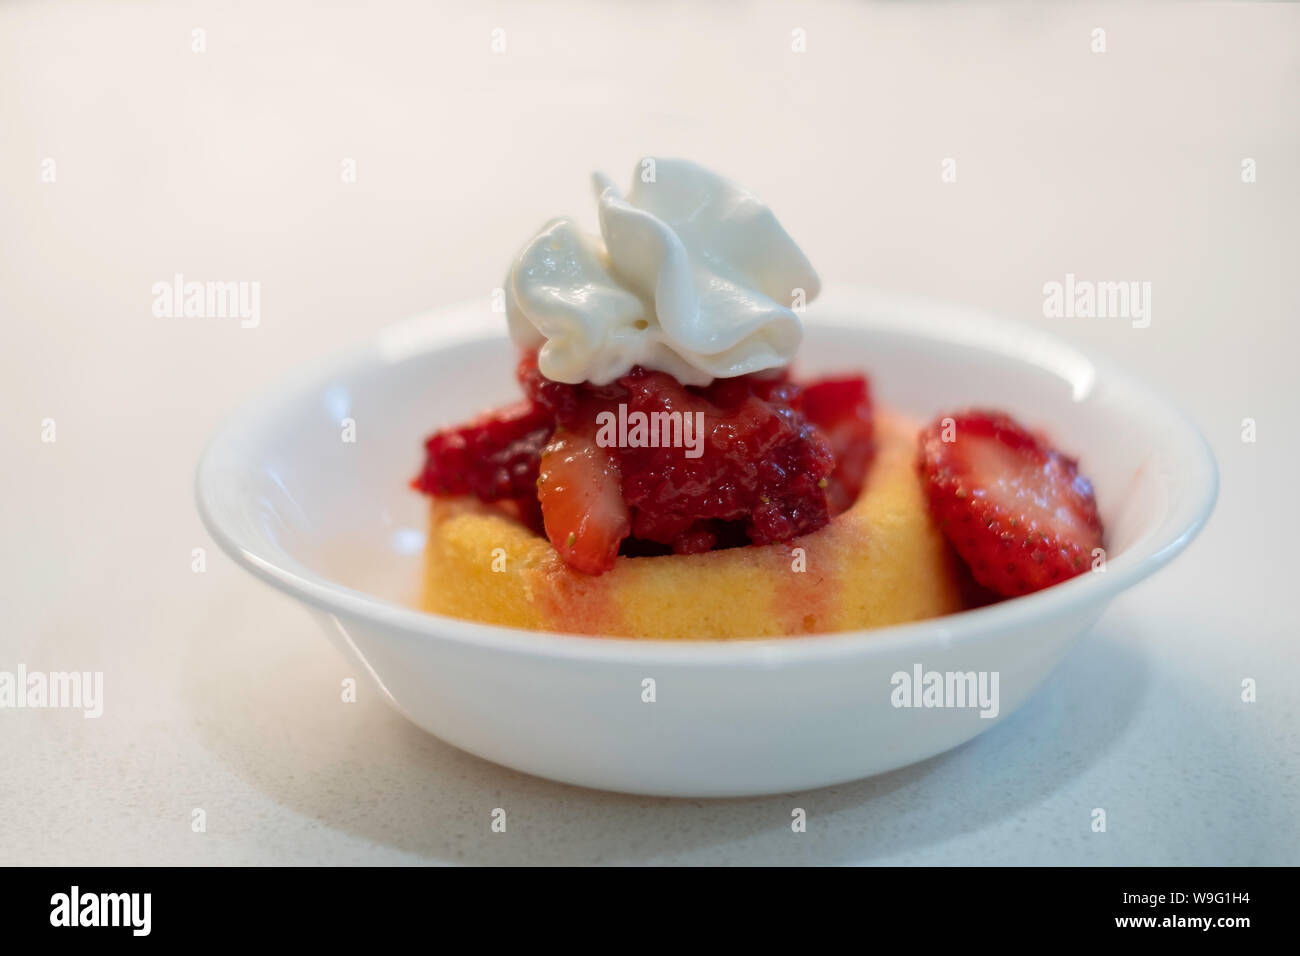 Strawberries on sponge cake with whipped cream. Strawberry shortcake. USA. Stock Photo